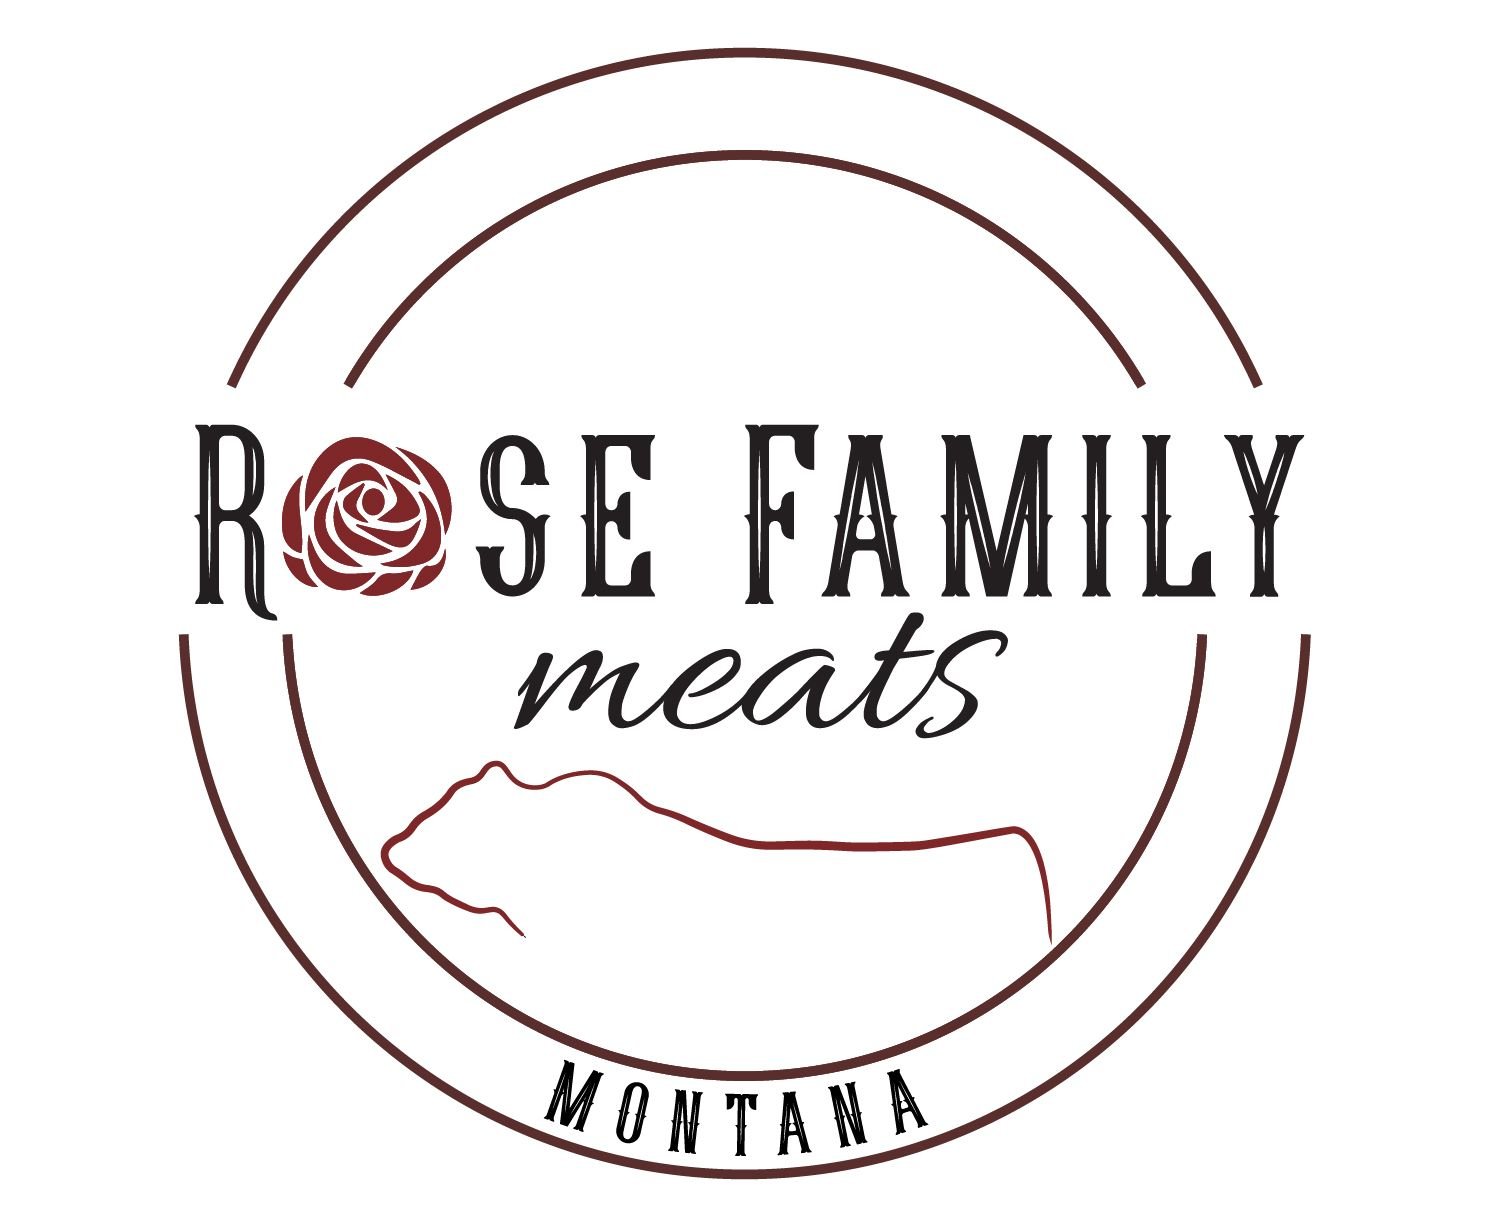 rose family meats logo.jpeg